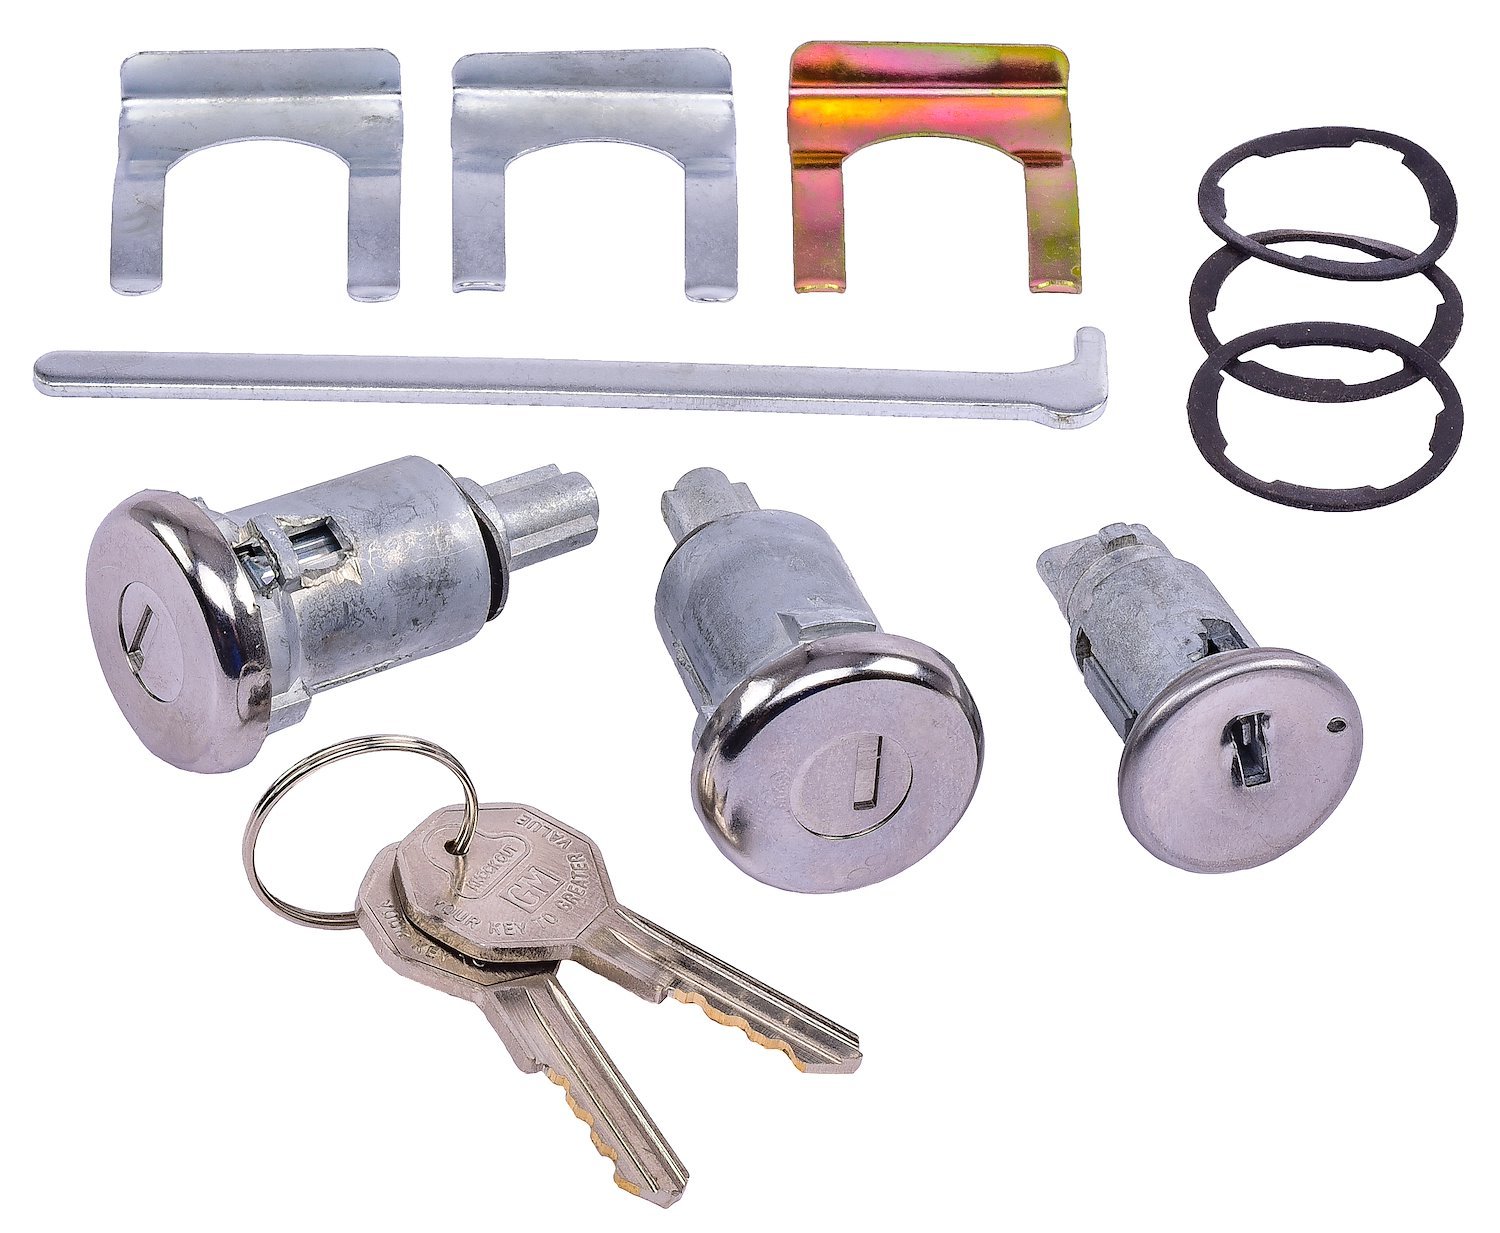 Ignition & Door Lock Set for 1966-1967 Cadillac, DeVille, Eldorado, Fleetwood With Long Shaft Cylinders [Original Octagon Keys]